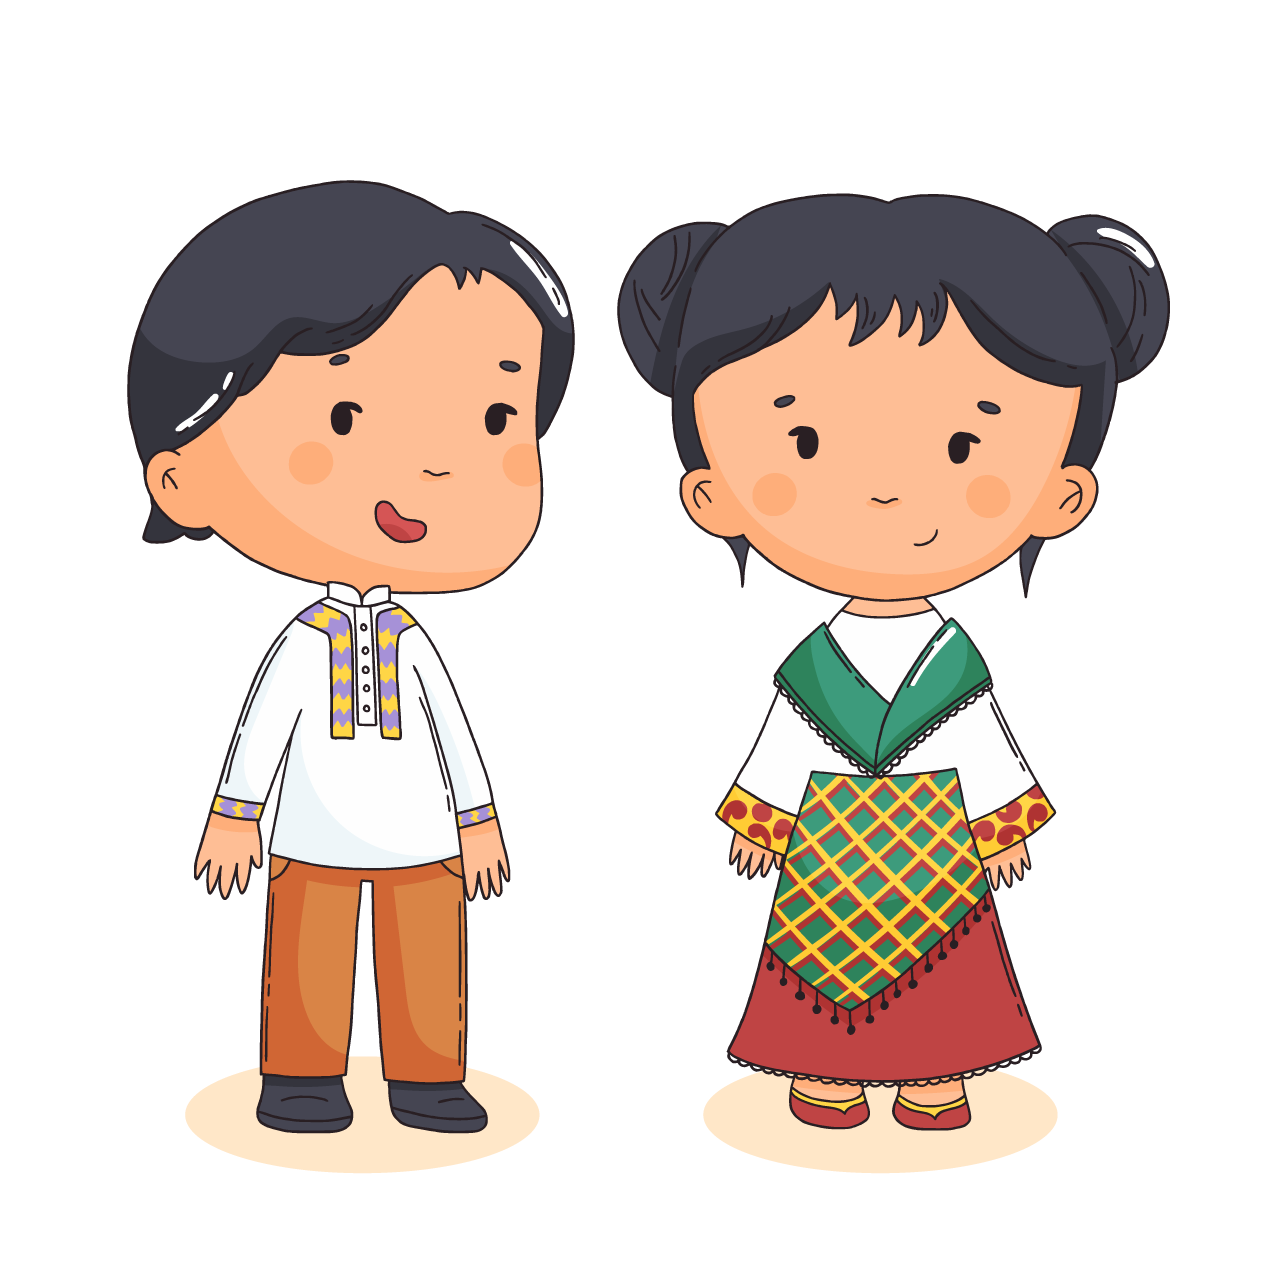 Hand drawn philippine cute boy and girl cartoon illustration image